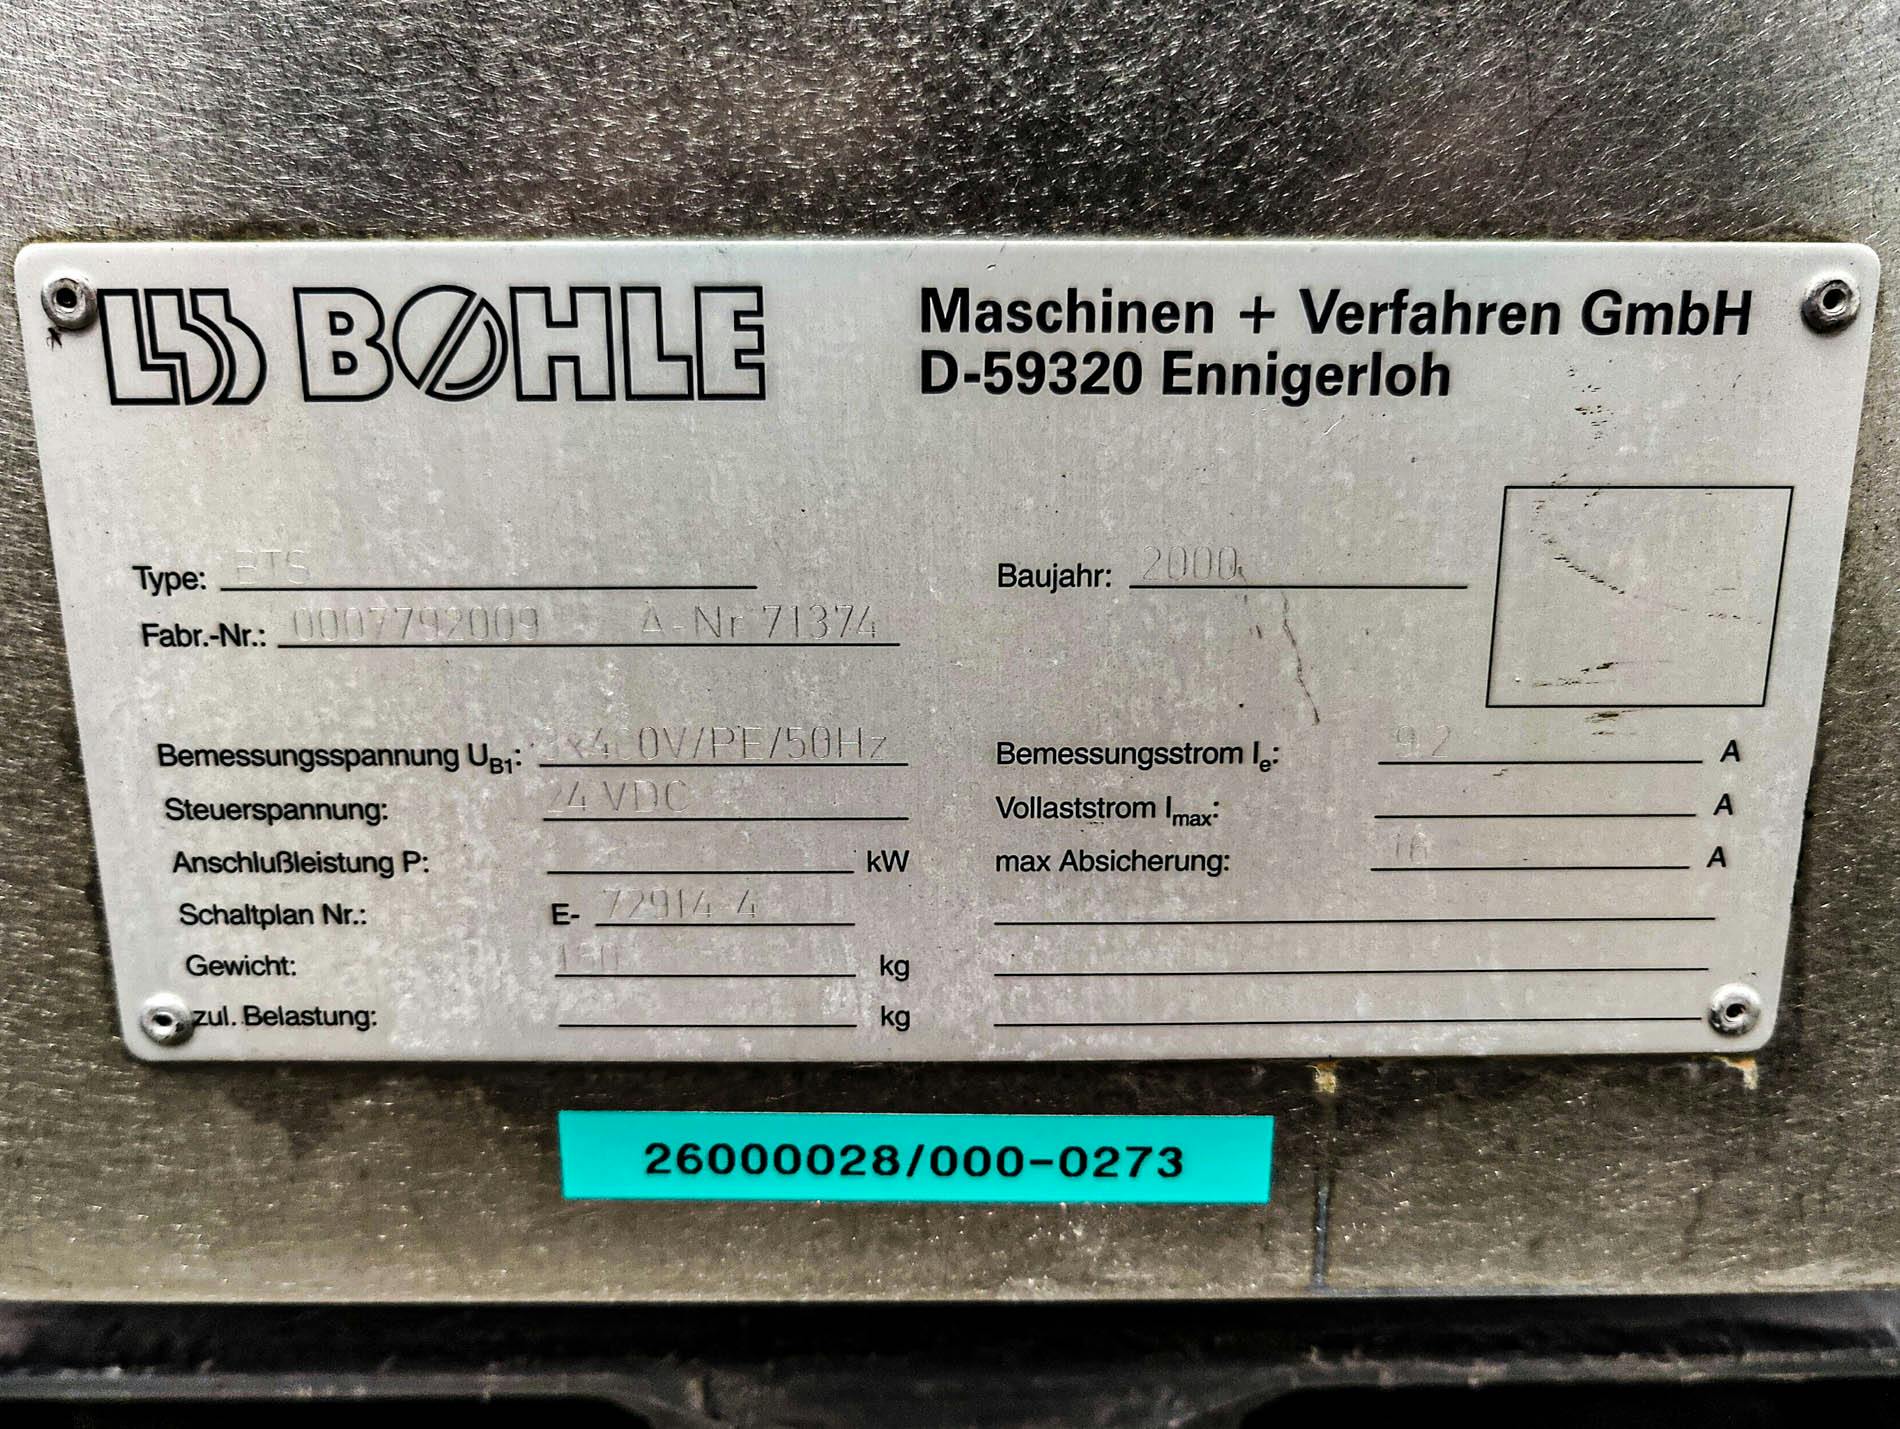 Bohle BTS Bohle Turbo Sieve - Peneira granuladora - image 11